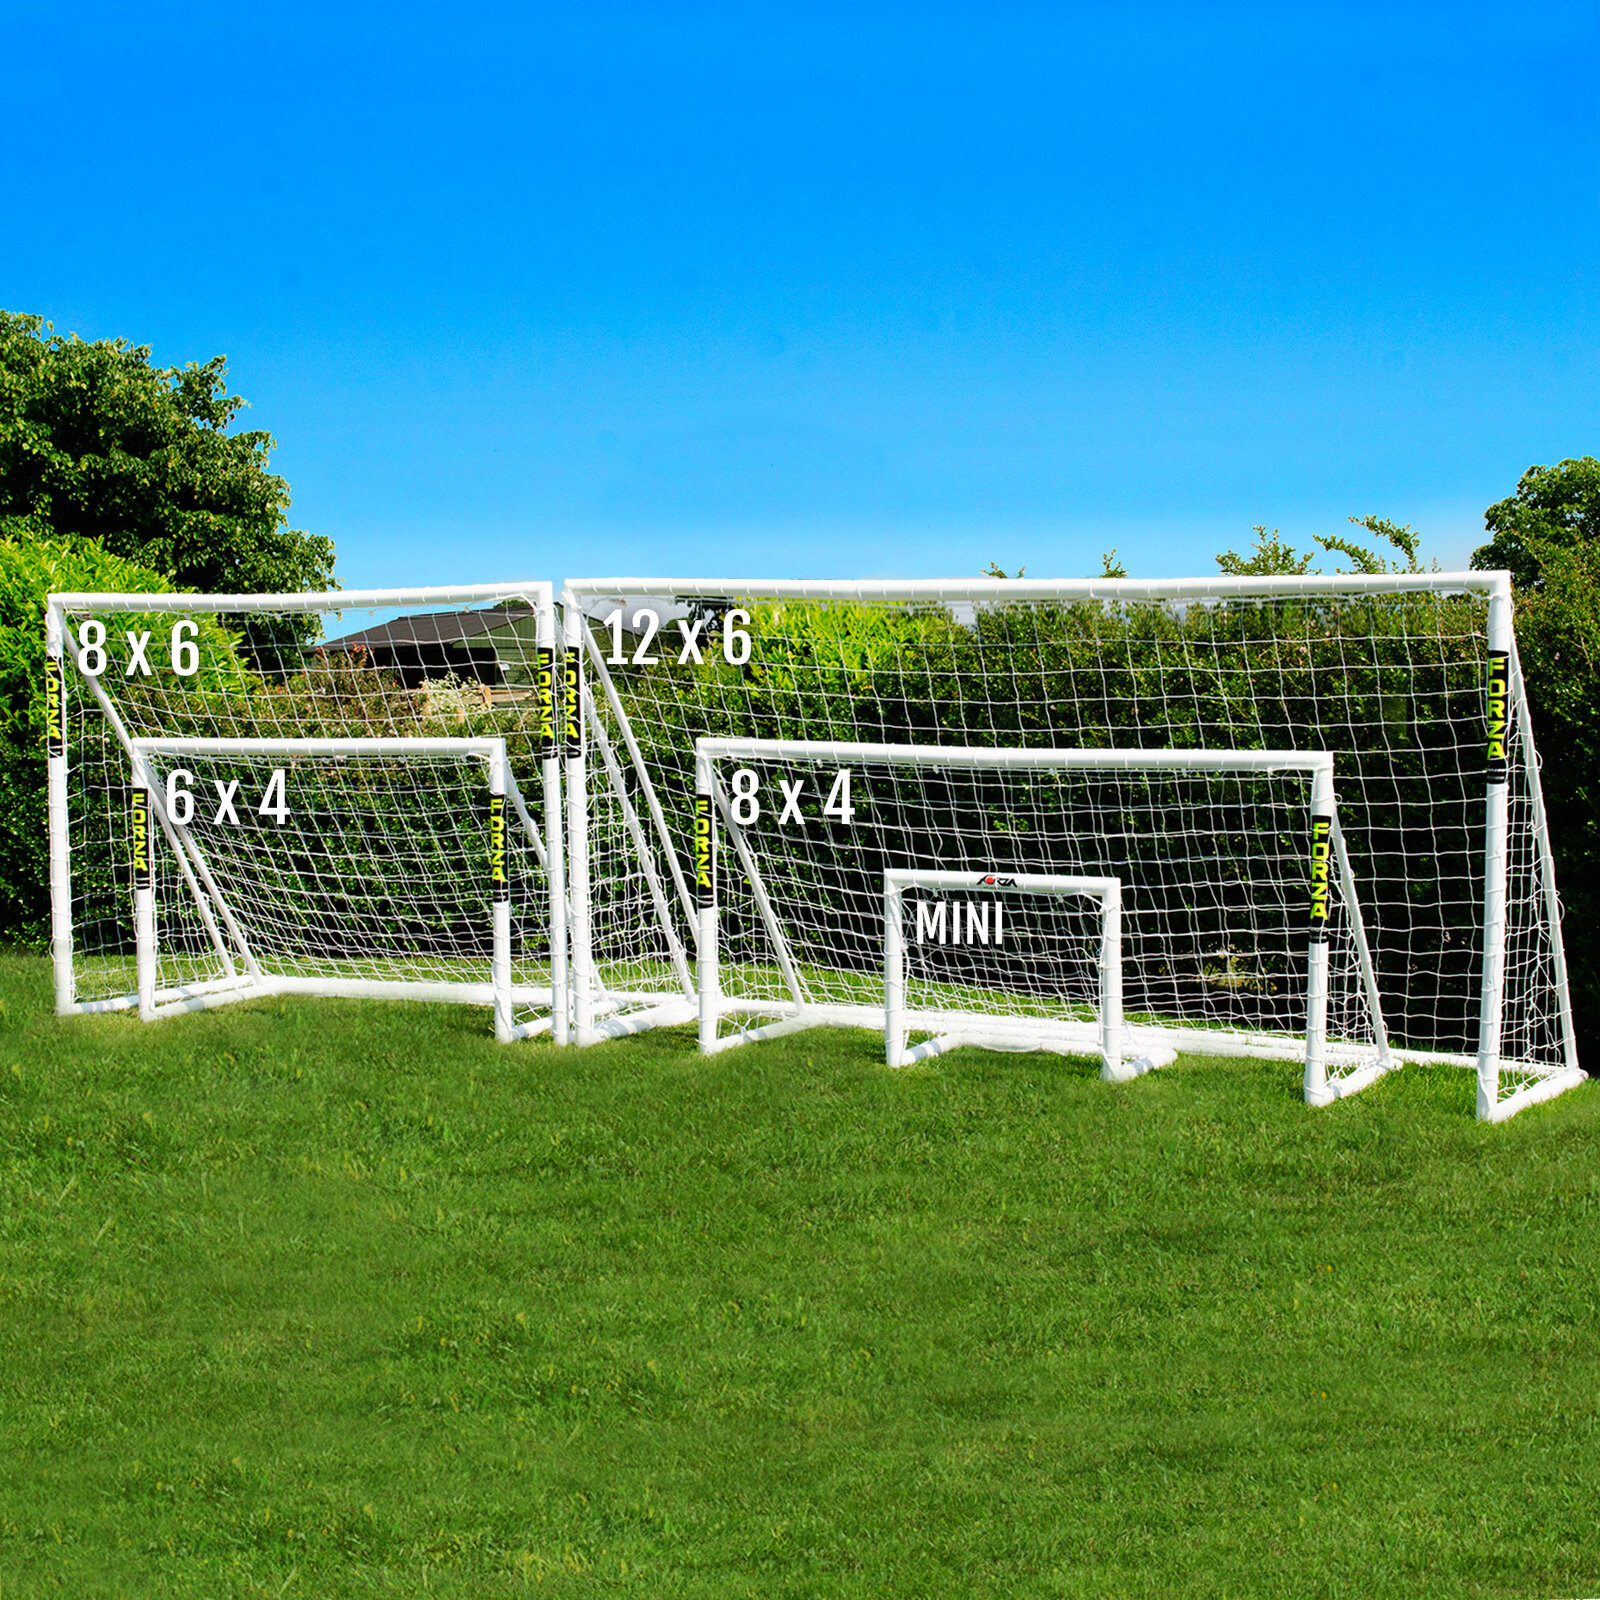 3.7m X 1.8m FORZA Soccer Goal Post